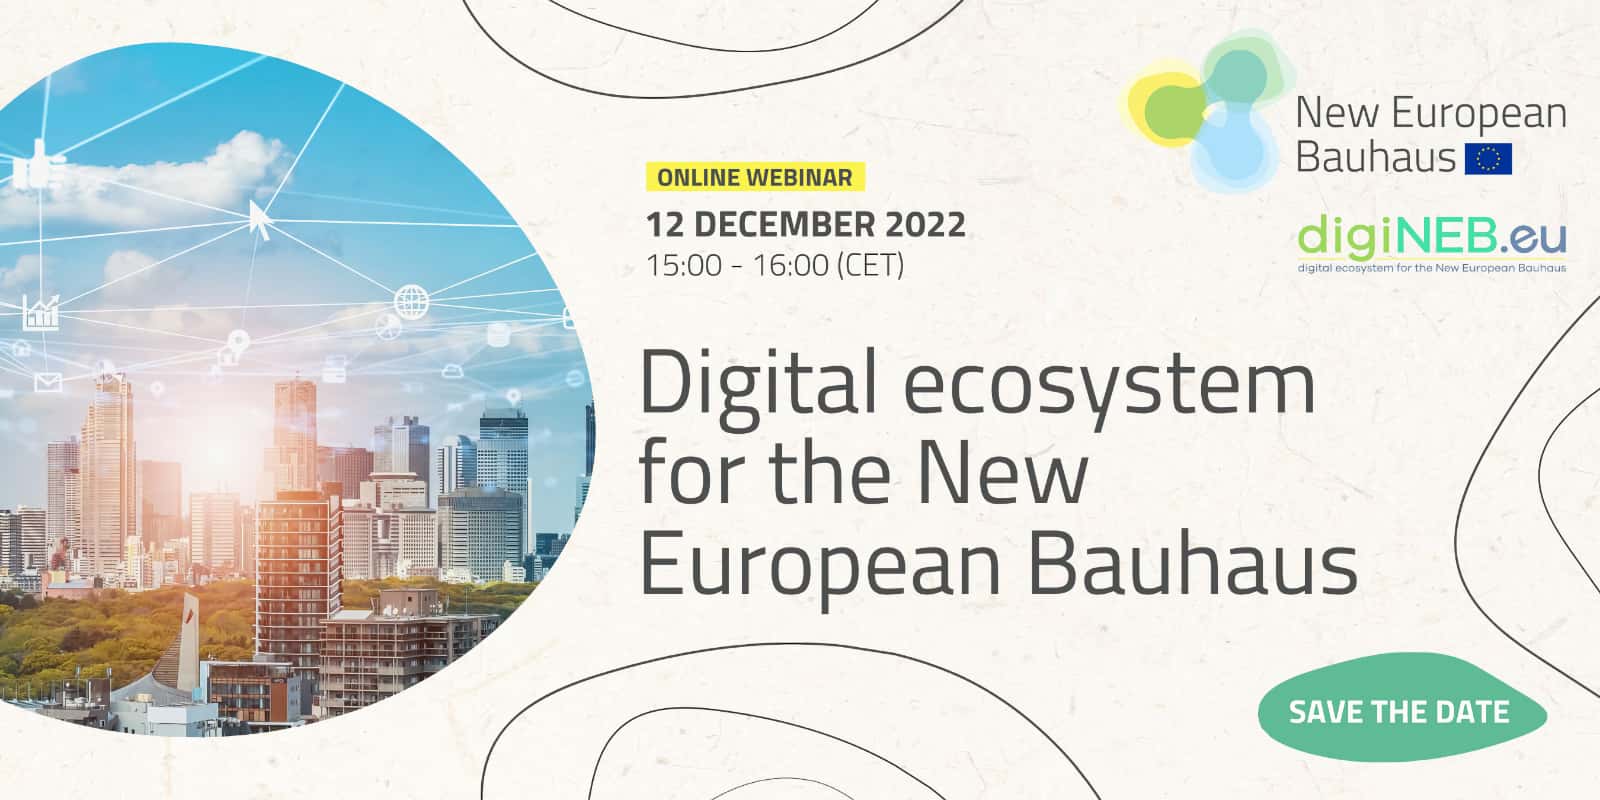 Digital ecosystem for the New European Bauhaus